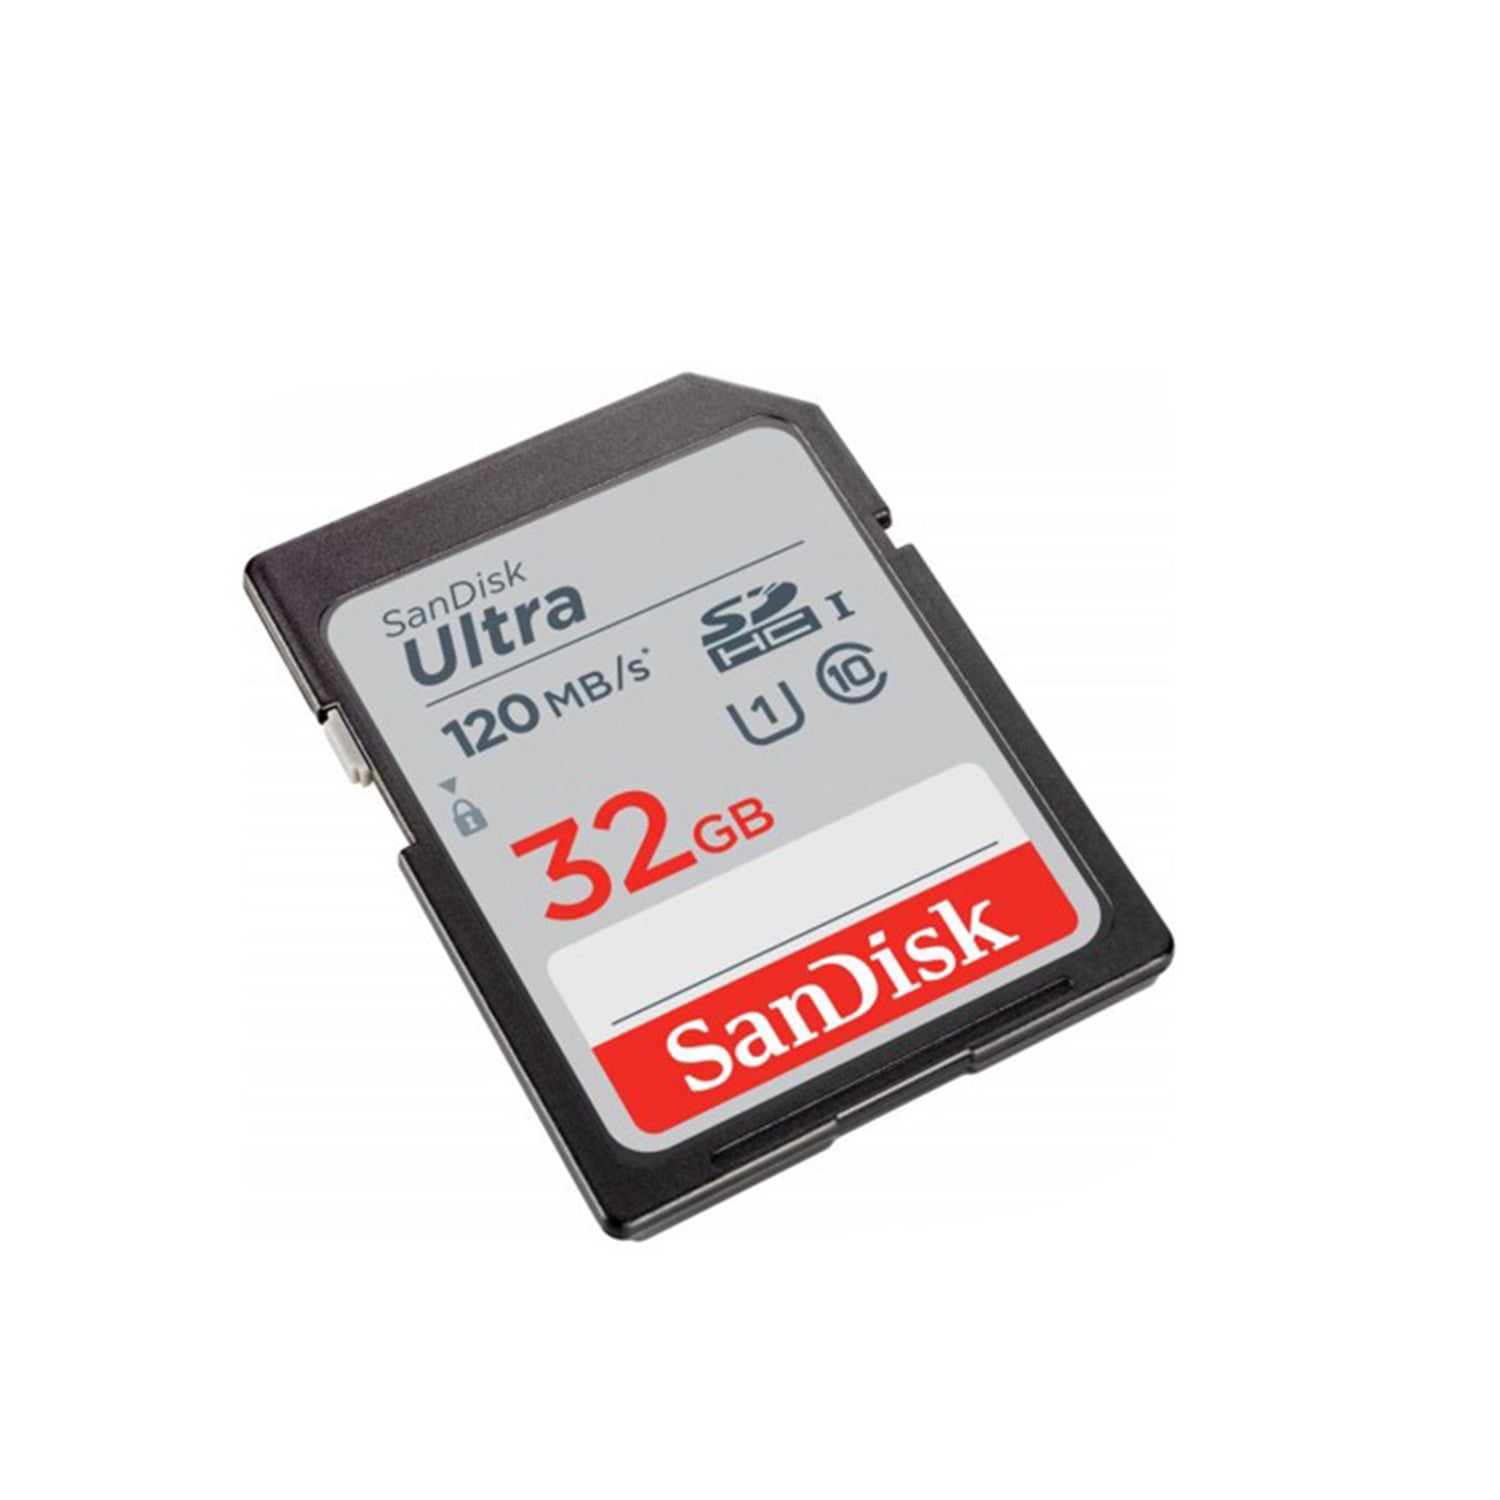 Sandisk Ultra SDHC UHS-I Card 32GB (120mbps)